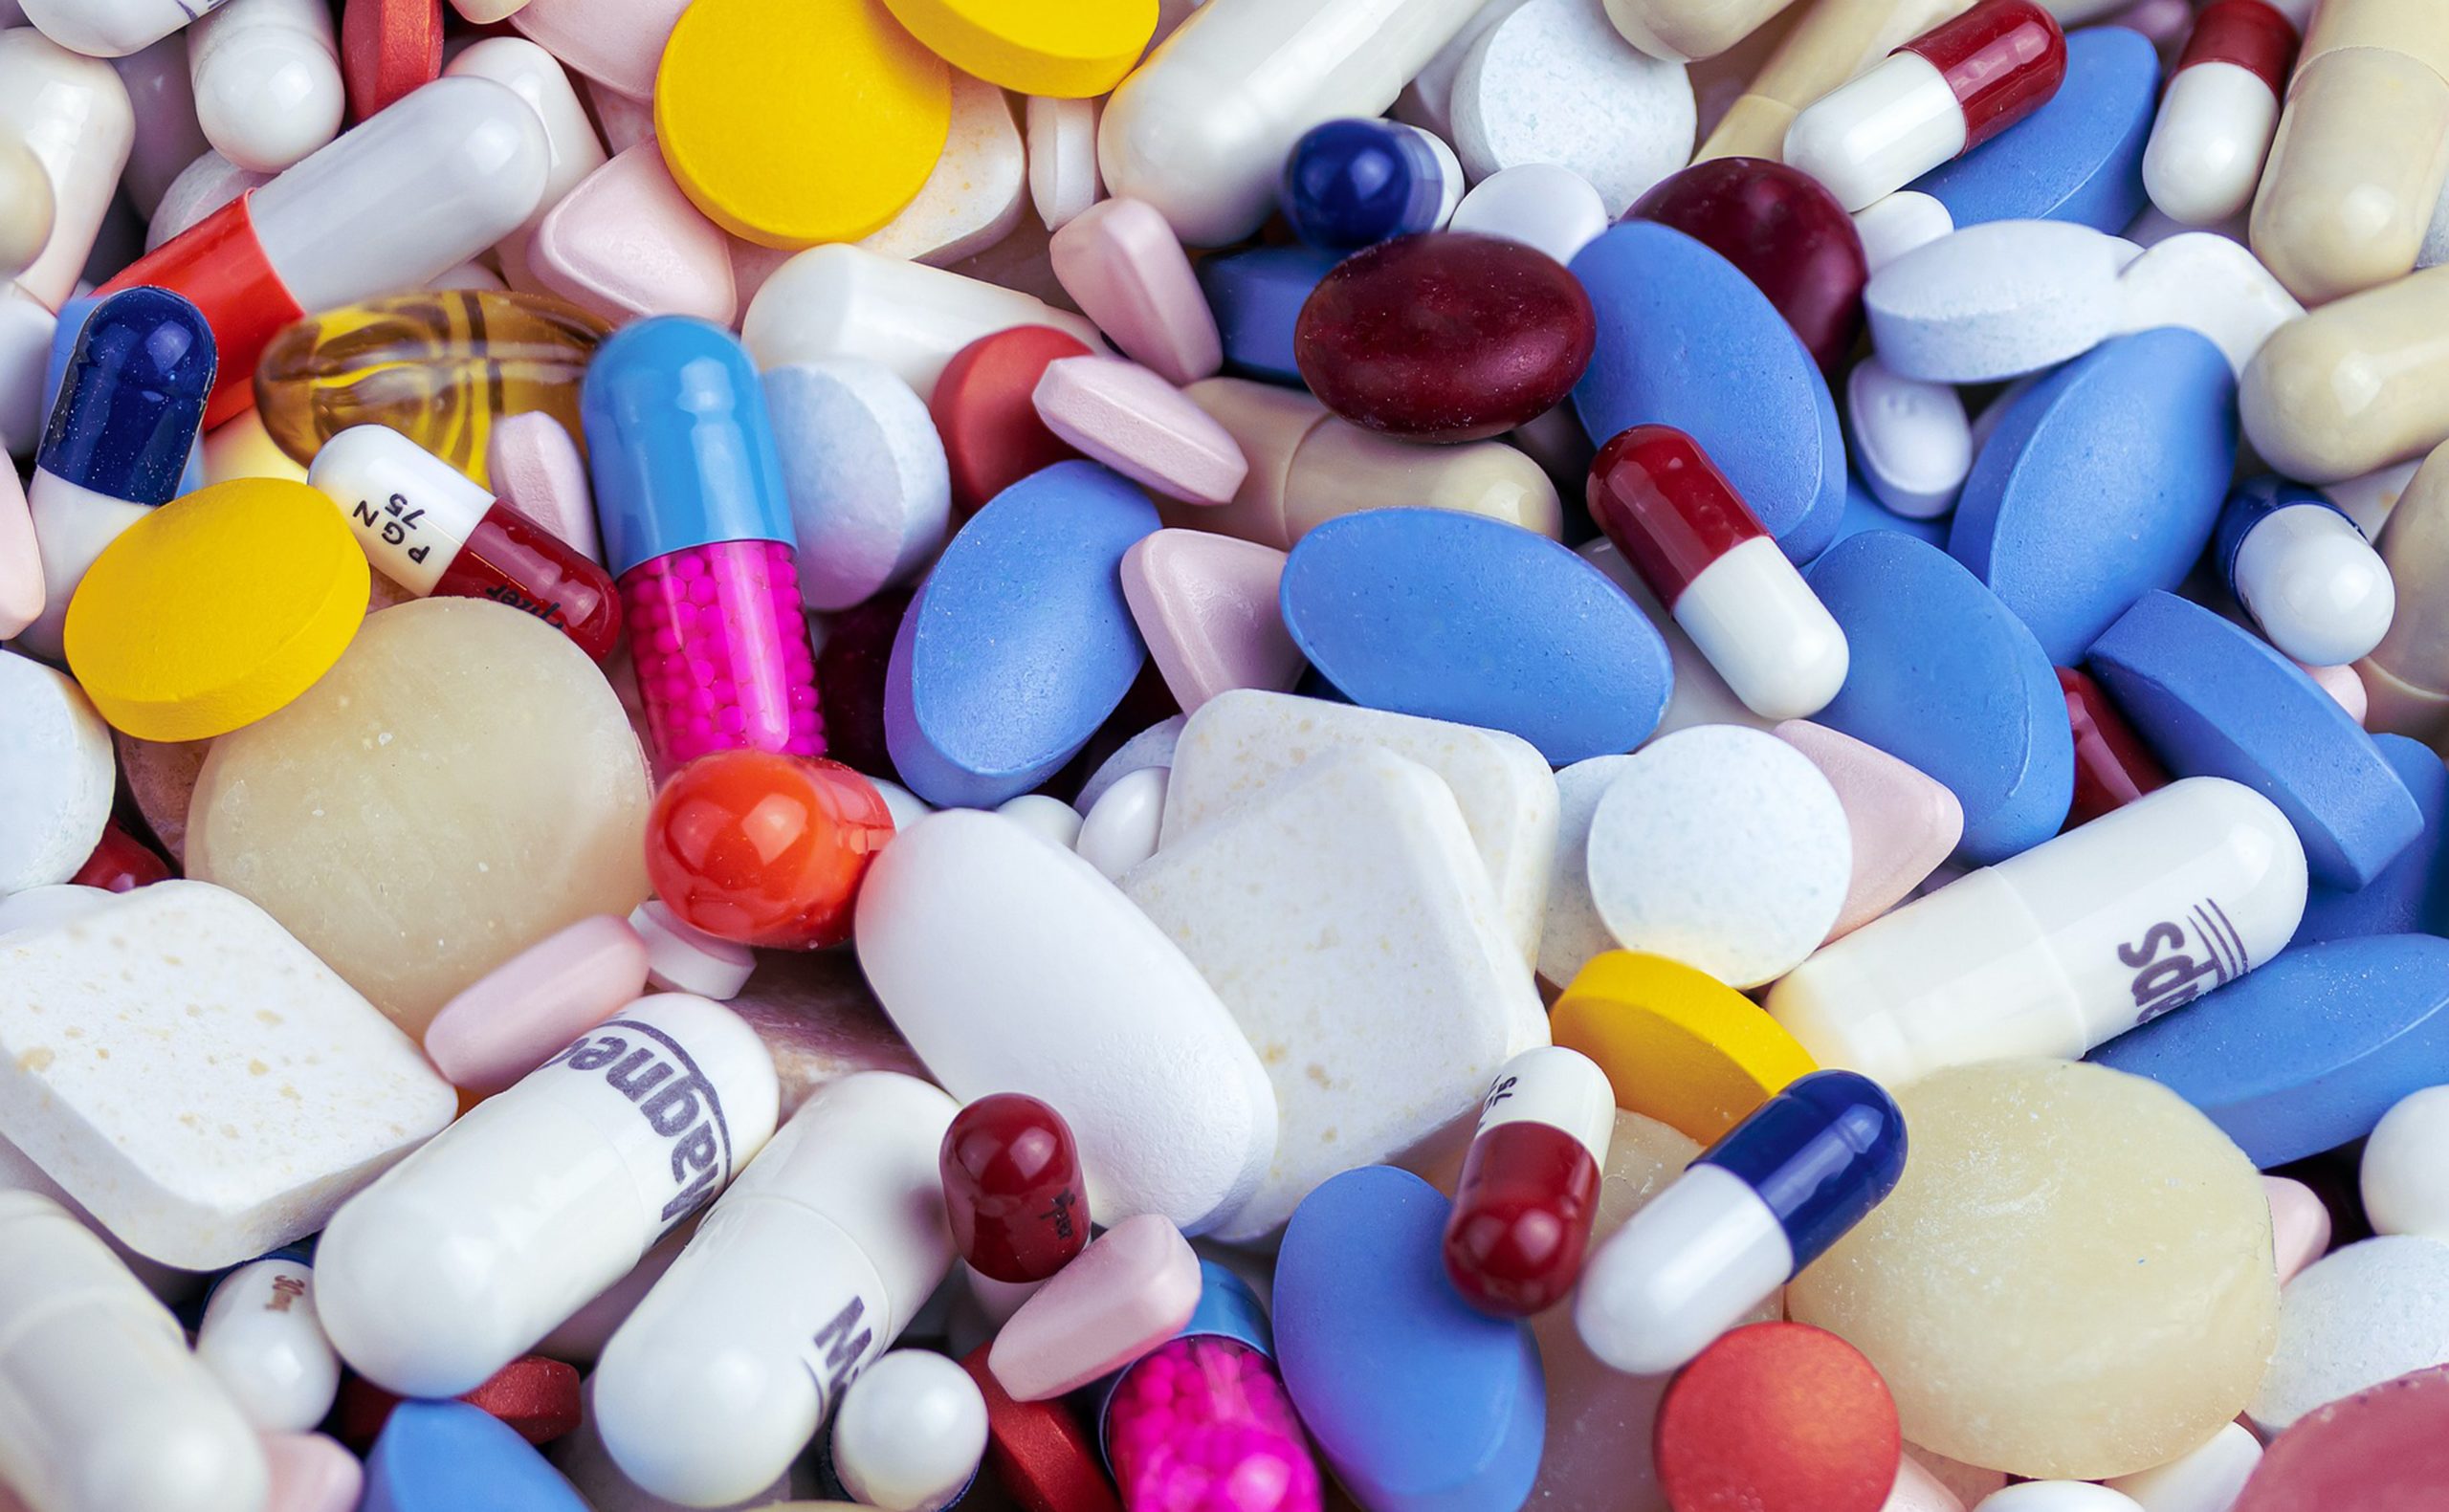 arizona drug possession laws - various colorful pills